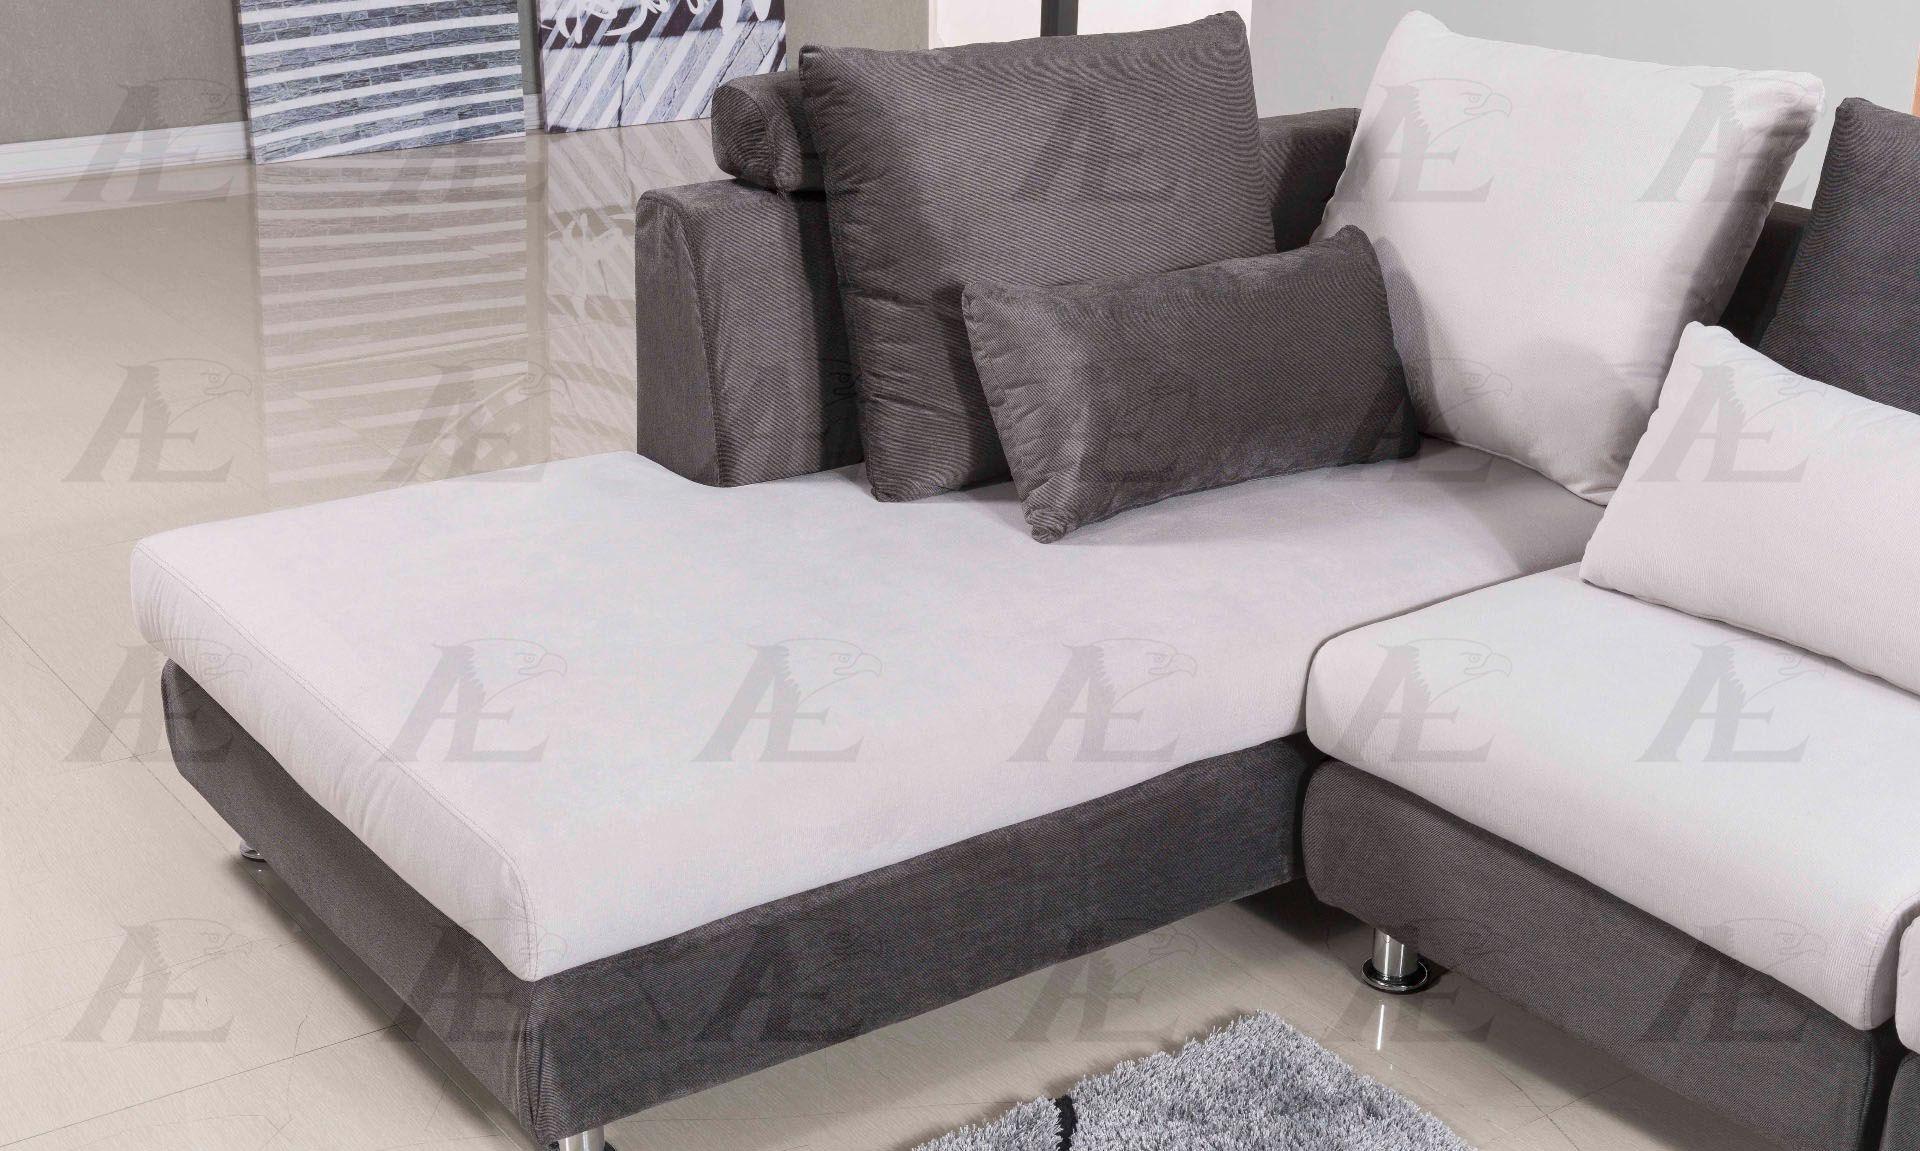 

    
American Eagle Furniture AE-L341 Sectional Sofa Cream/Gray AE-L341R
